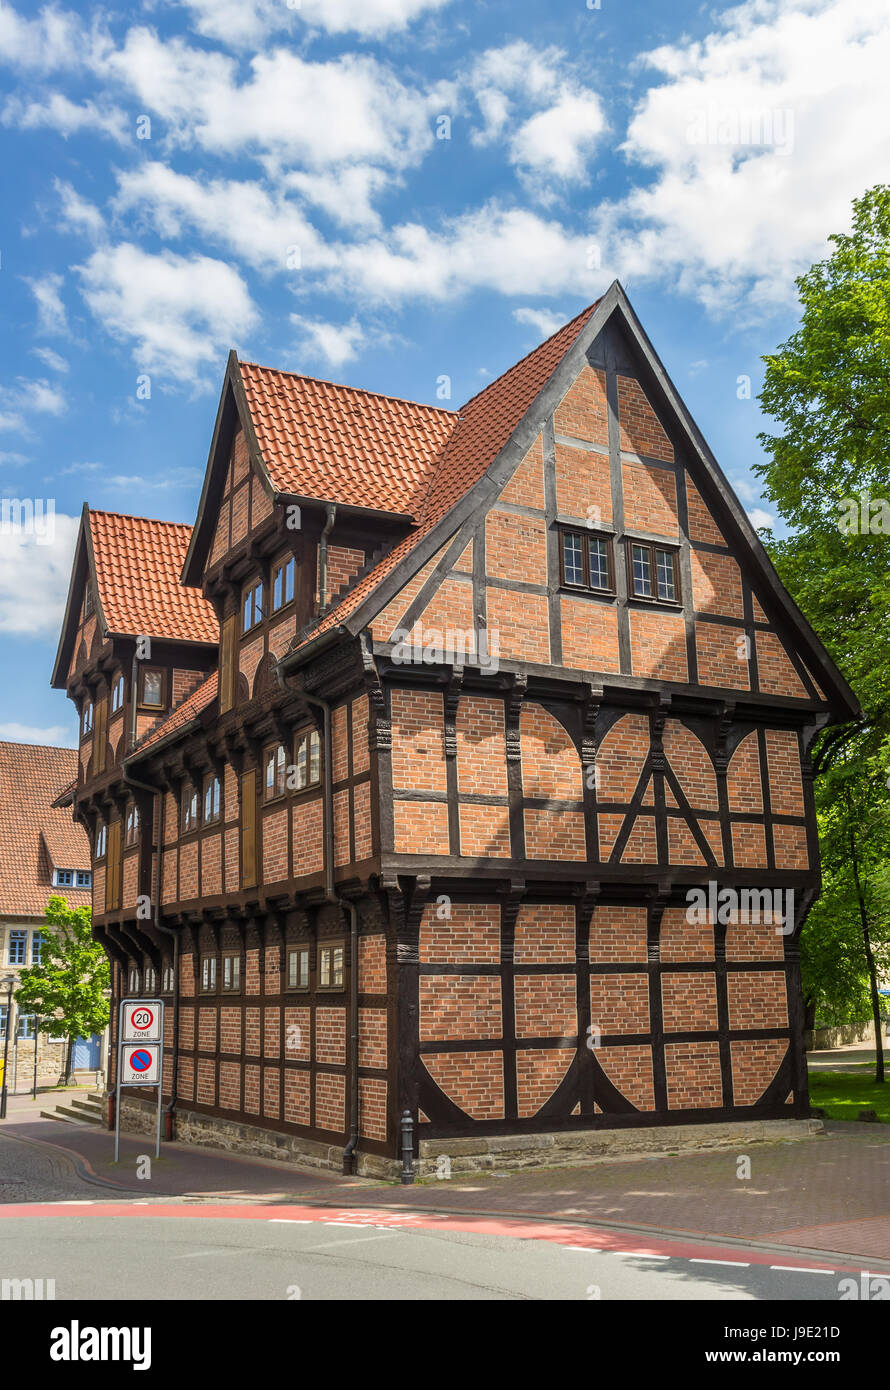 Historic half-timbered bulding Amtspforte in the center of Stadthagen, Germany Stock Photo